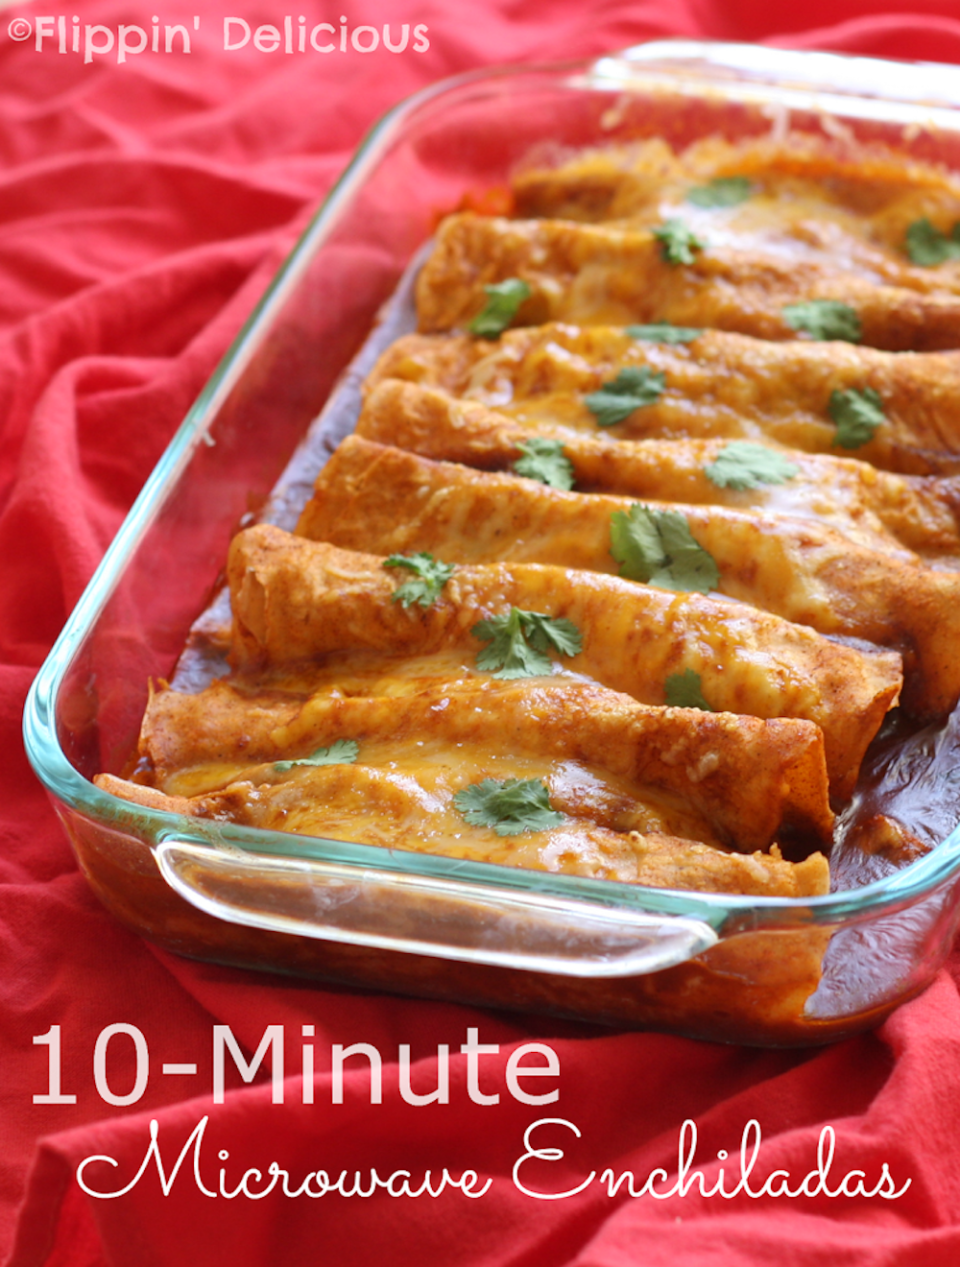 10-Minute Enchiladas from Flippin' Delicoius